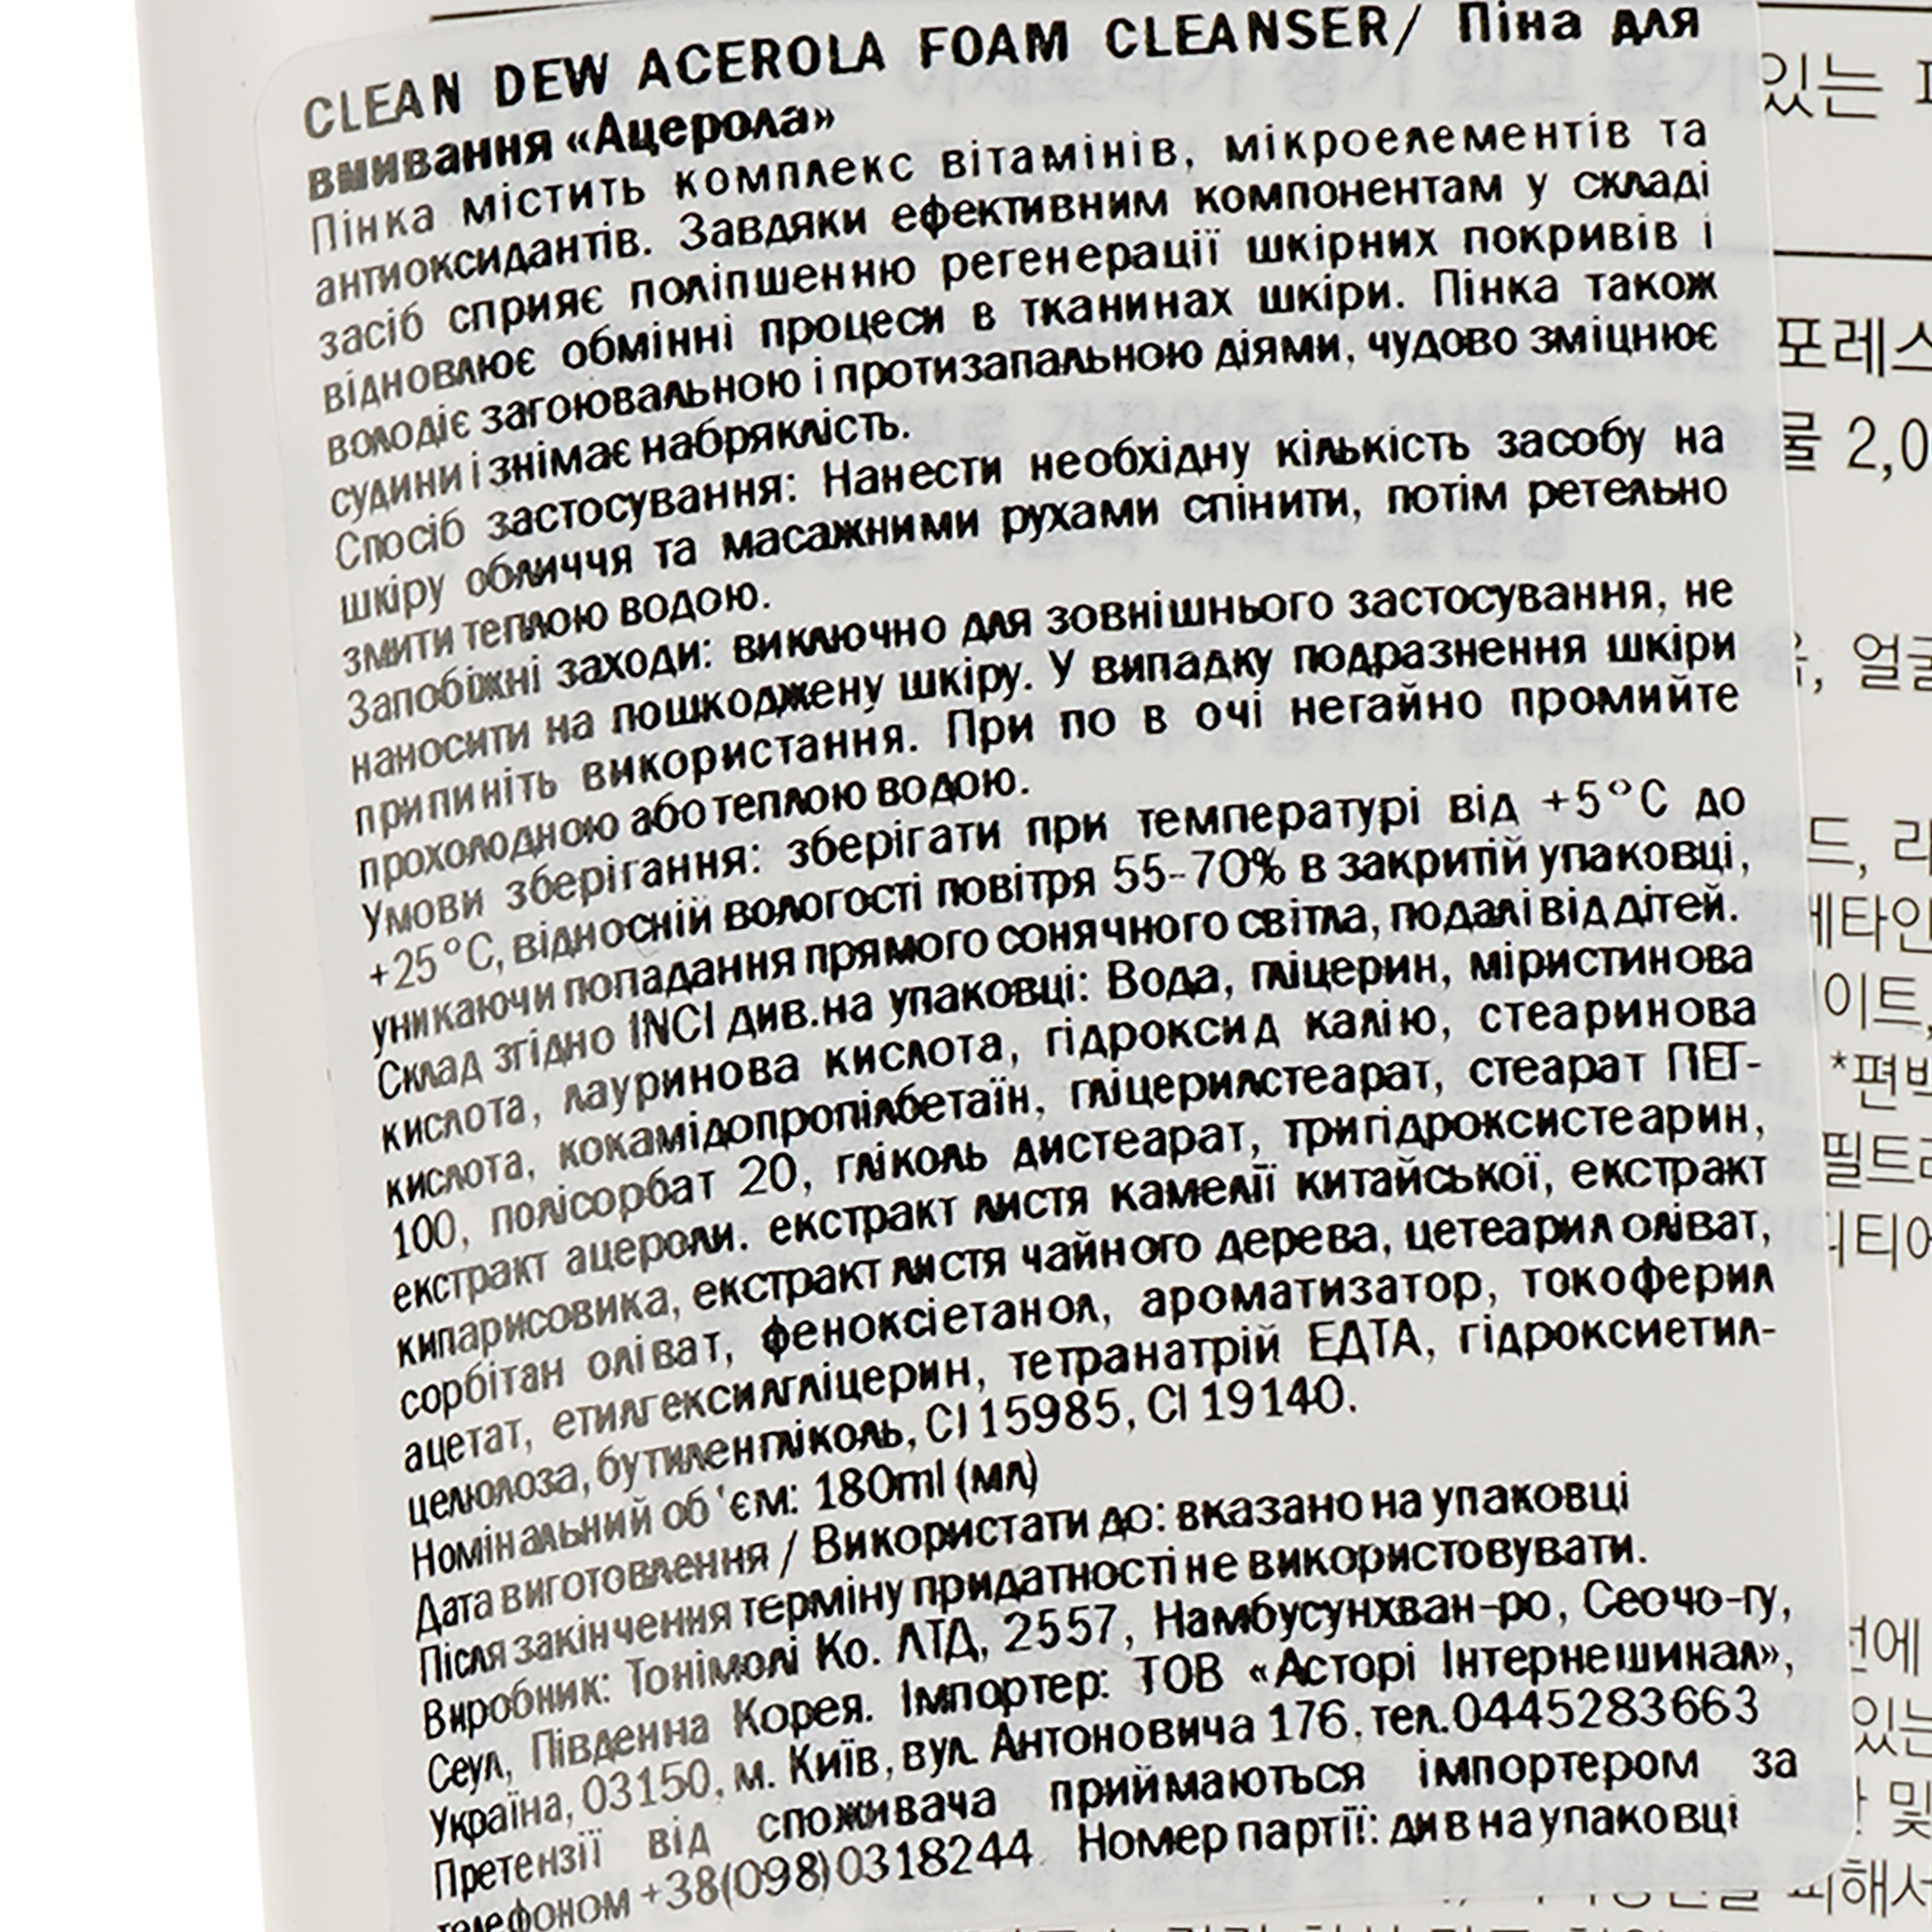 Пенка для умывания Tony Moly Clean Dew Acerola Foam Cleanser Ацерола, 180 мл - фото 3